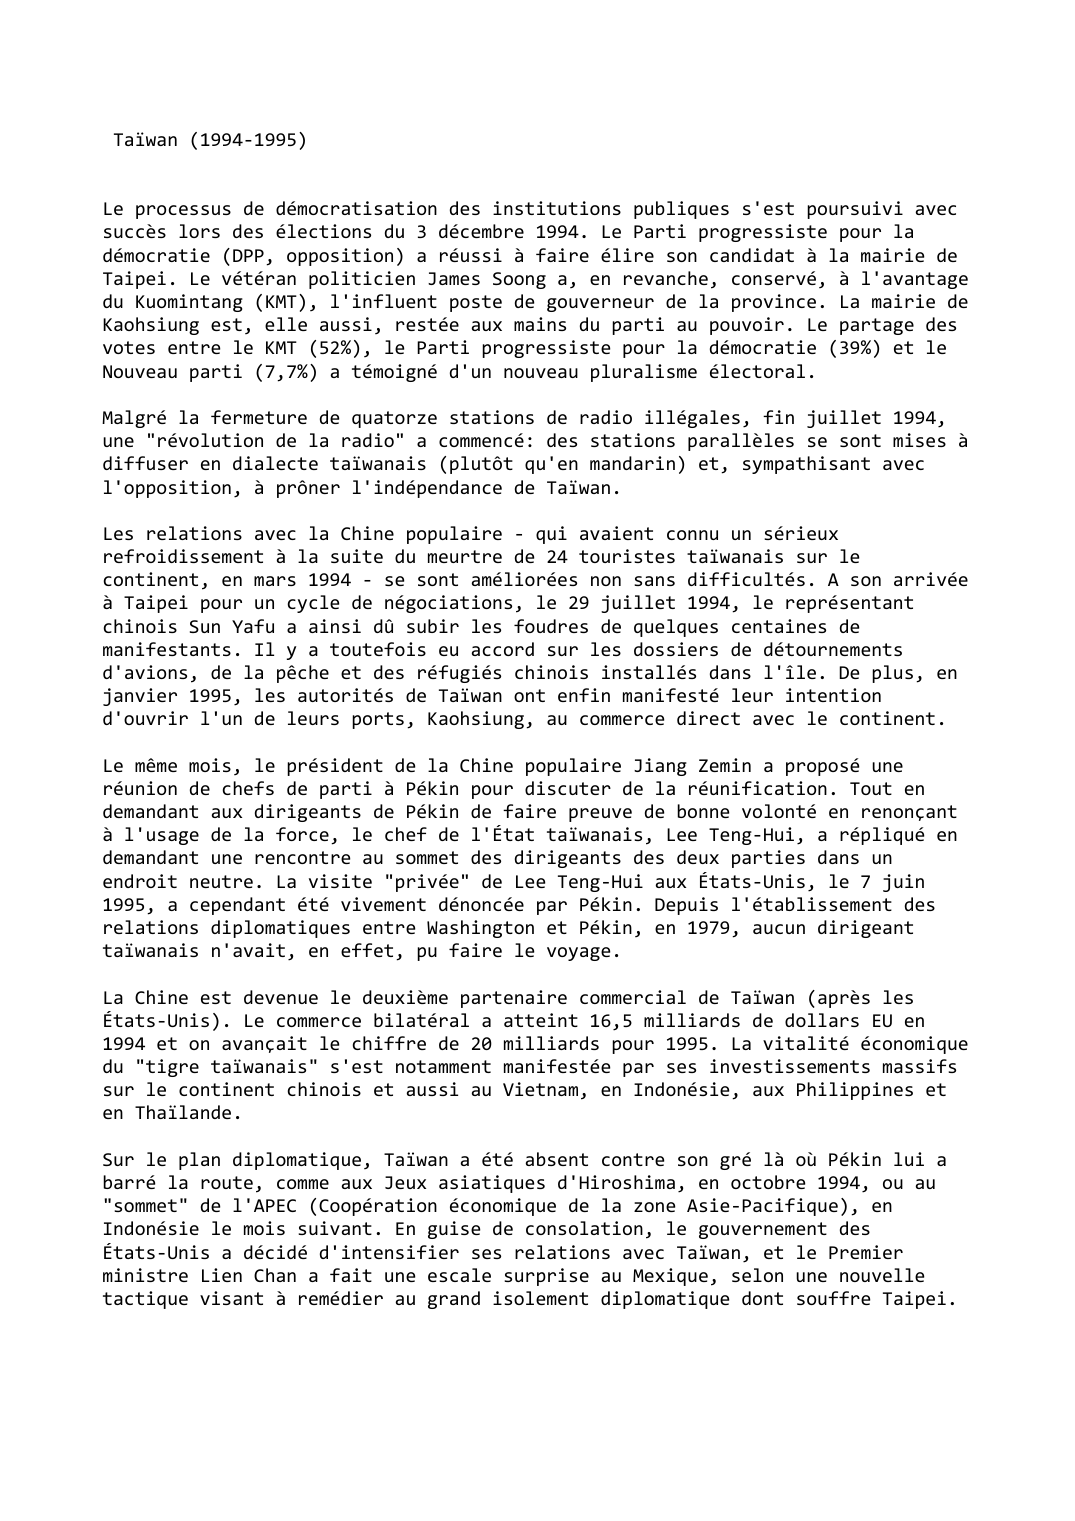 Prévisualisation du document Taïwan (1994-1995)